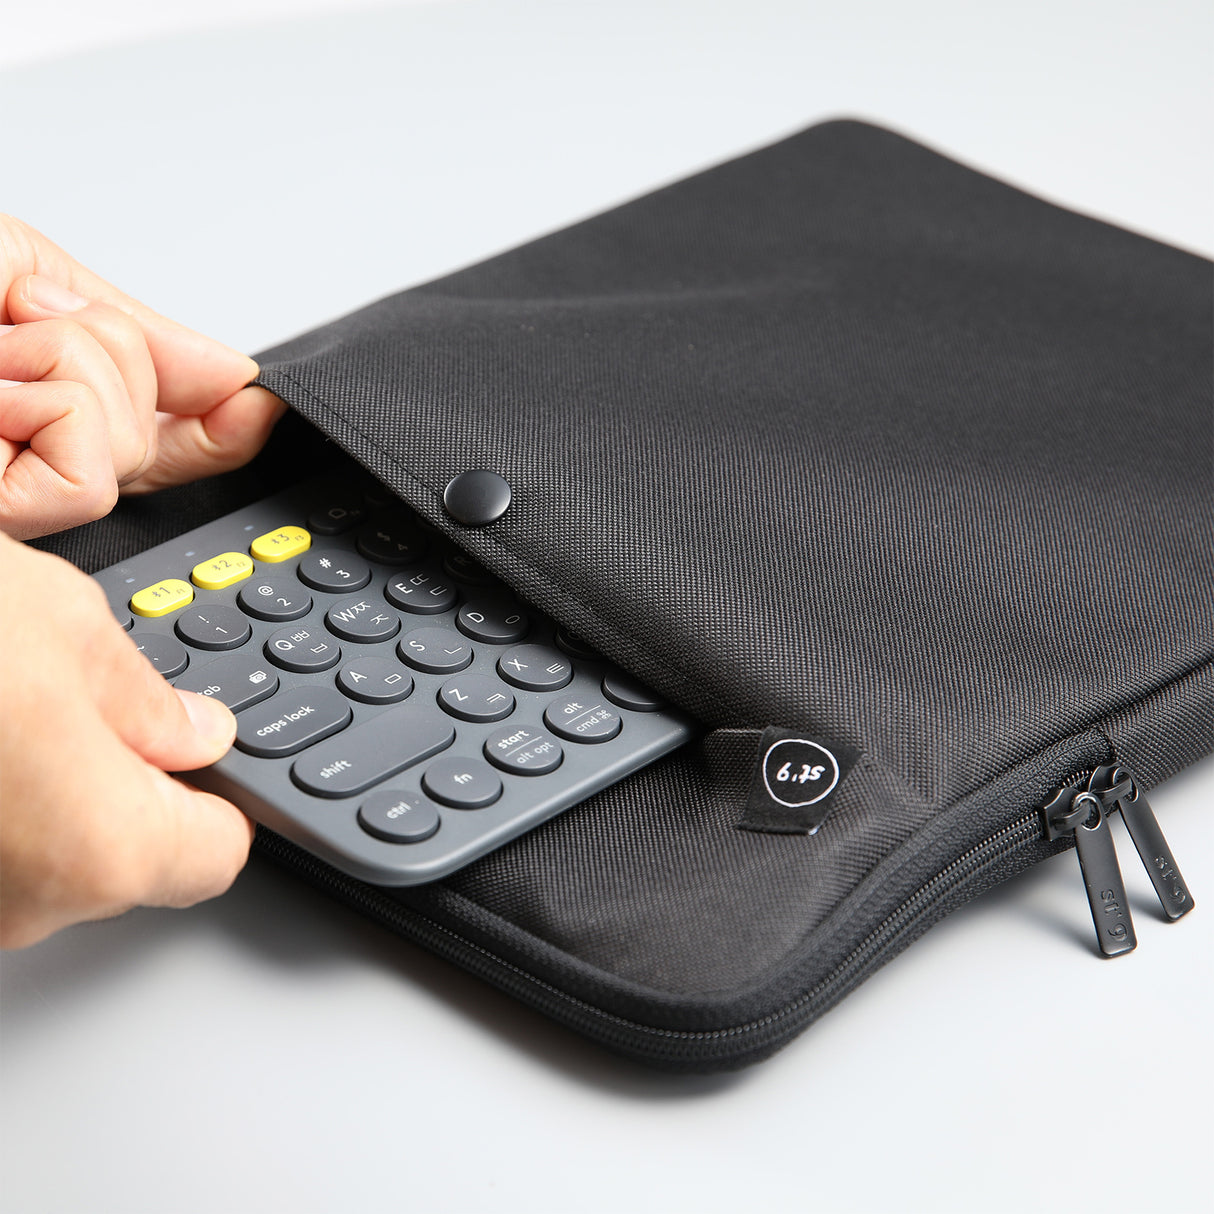 15 inch Laptop Sleeve Padded Travel Carry Case Bag L size LUKE BLACK